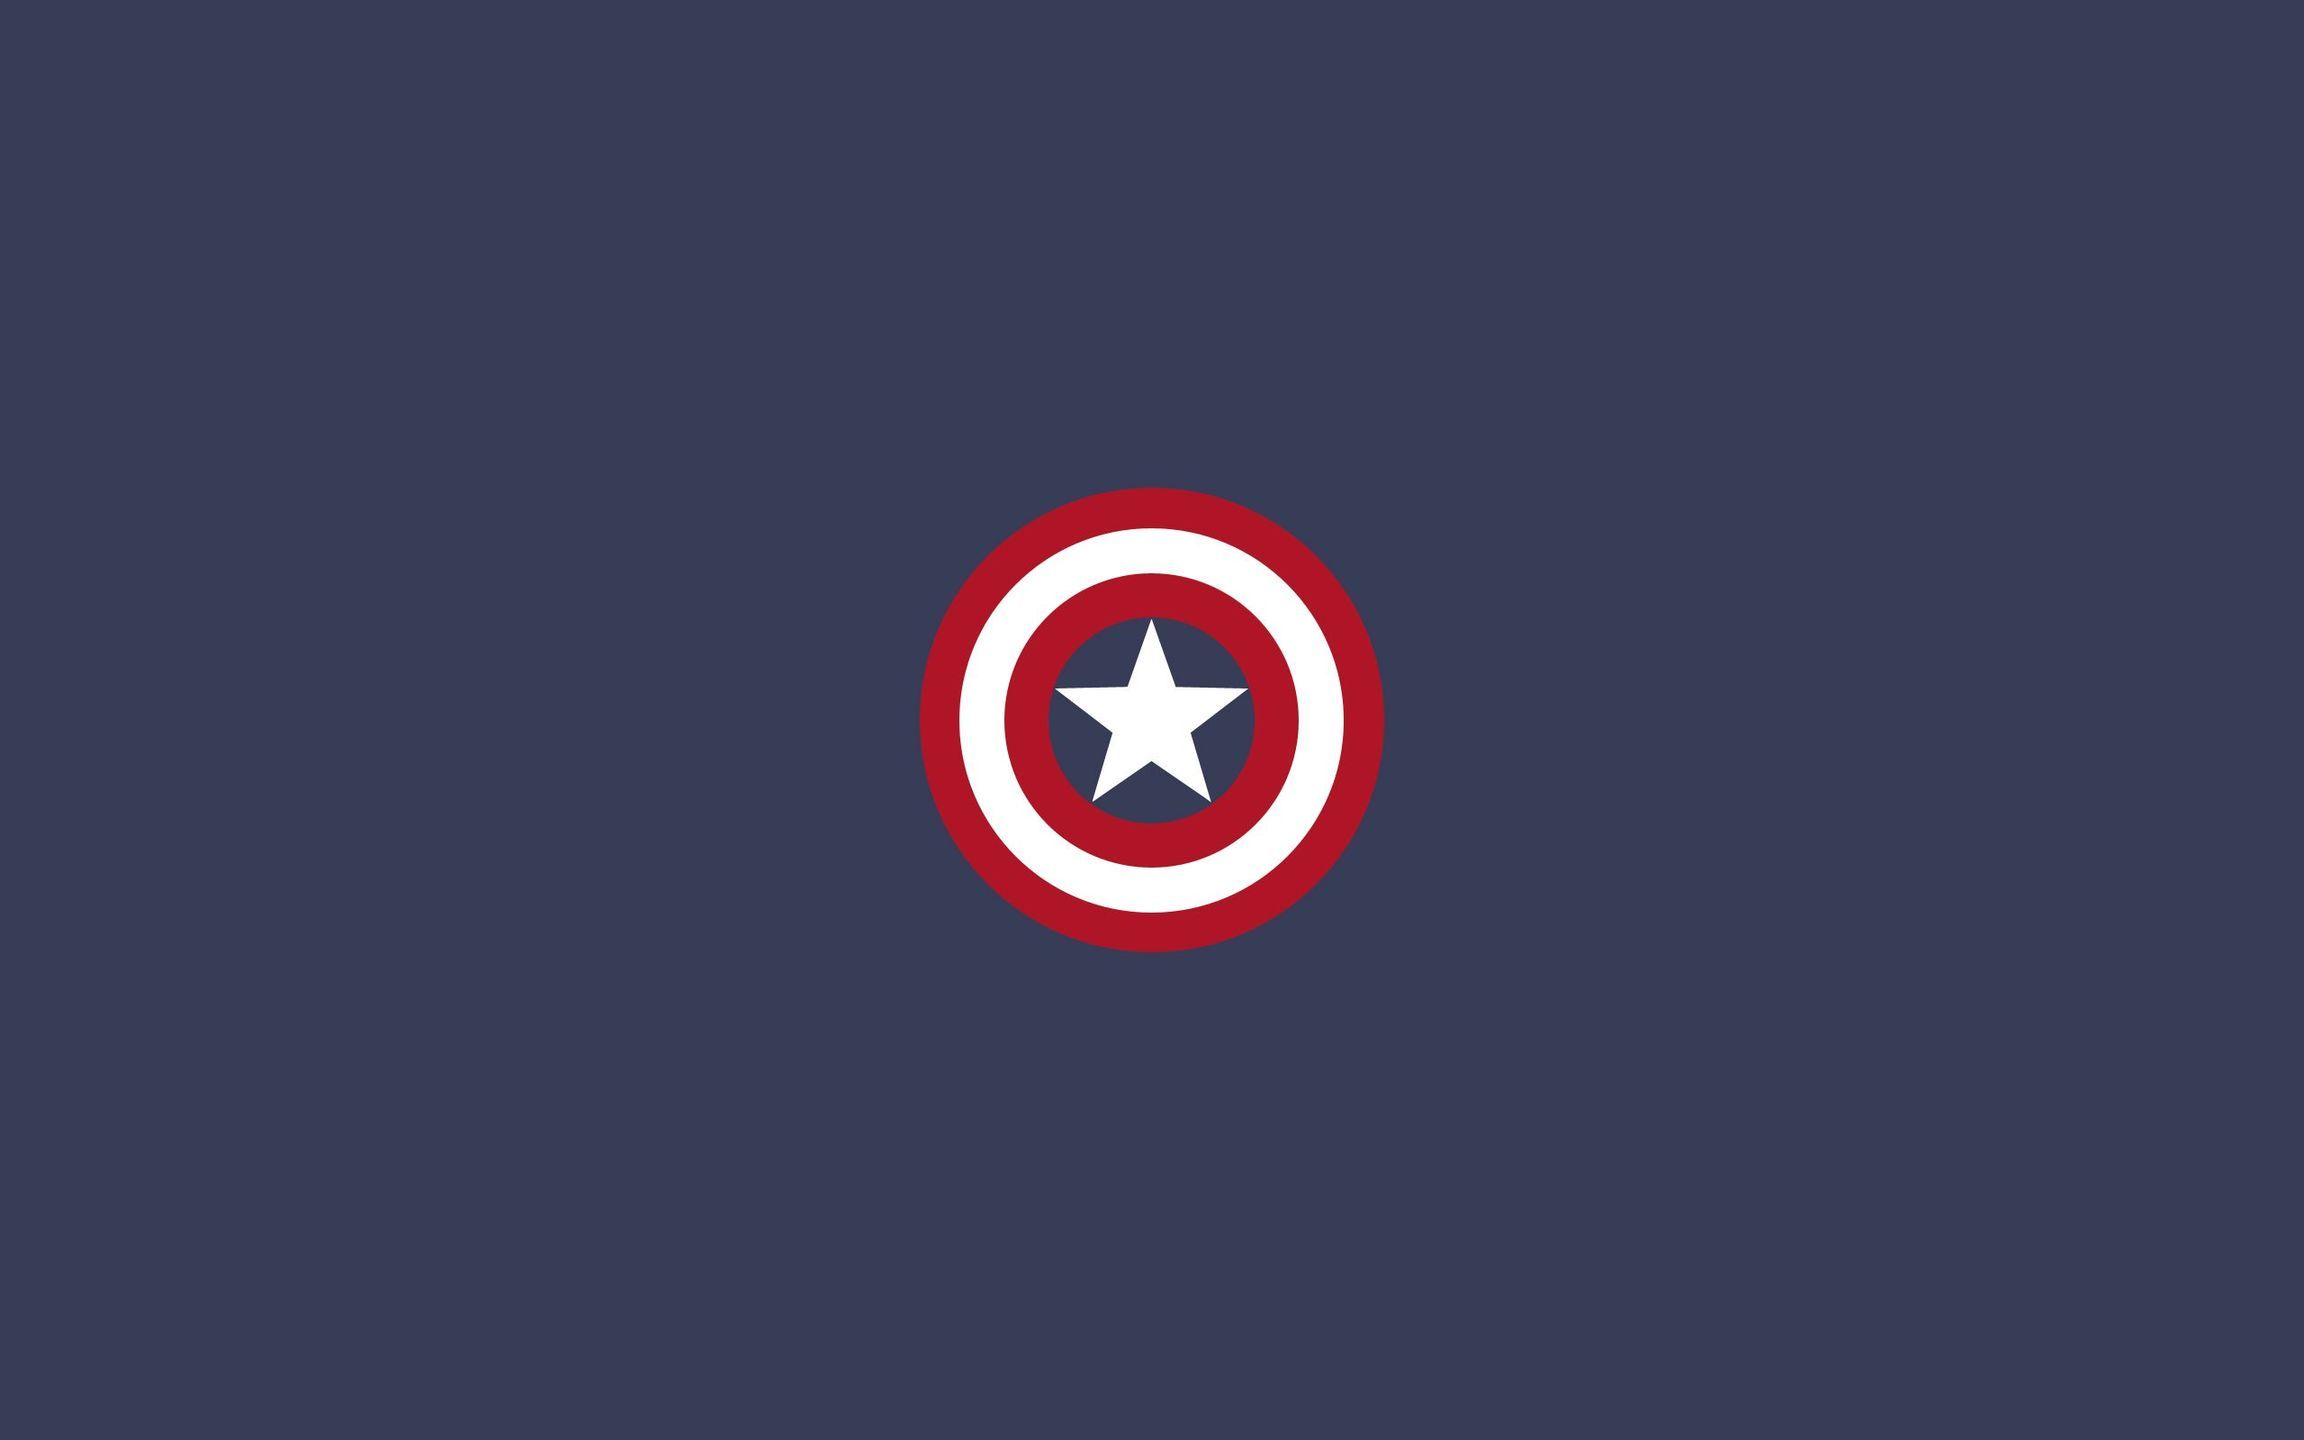 Captain America shield wallpaper. Captain america wallpaper, Captain america shield wallpaper, Minimalist wallpaper